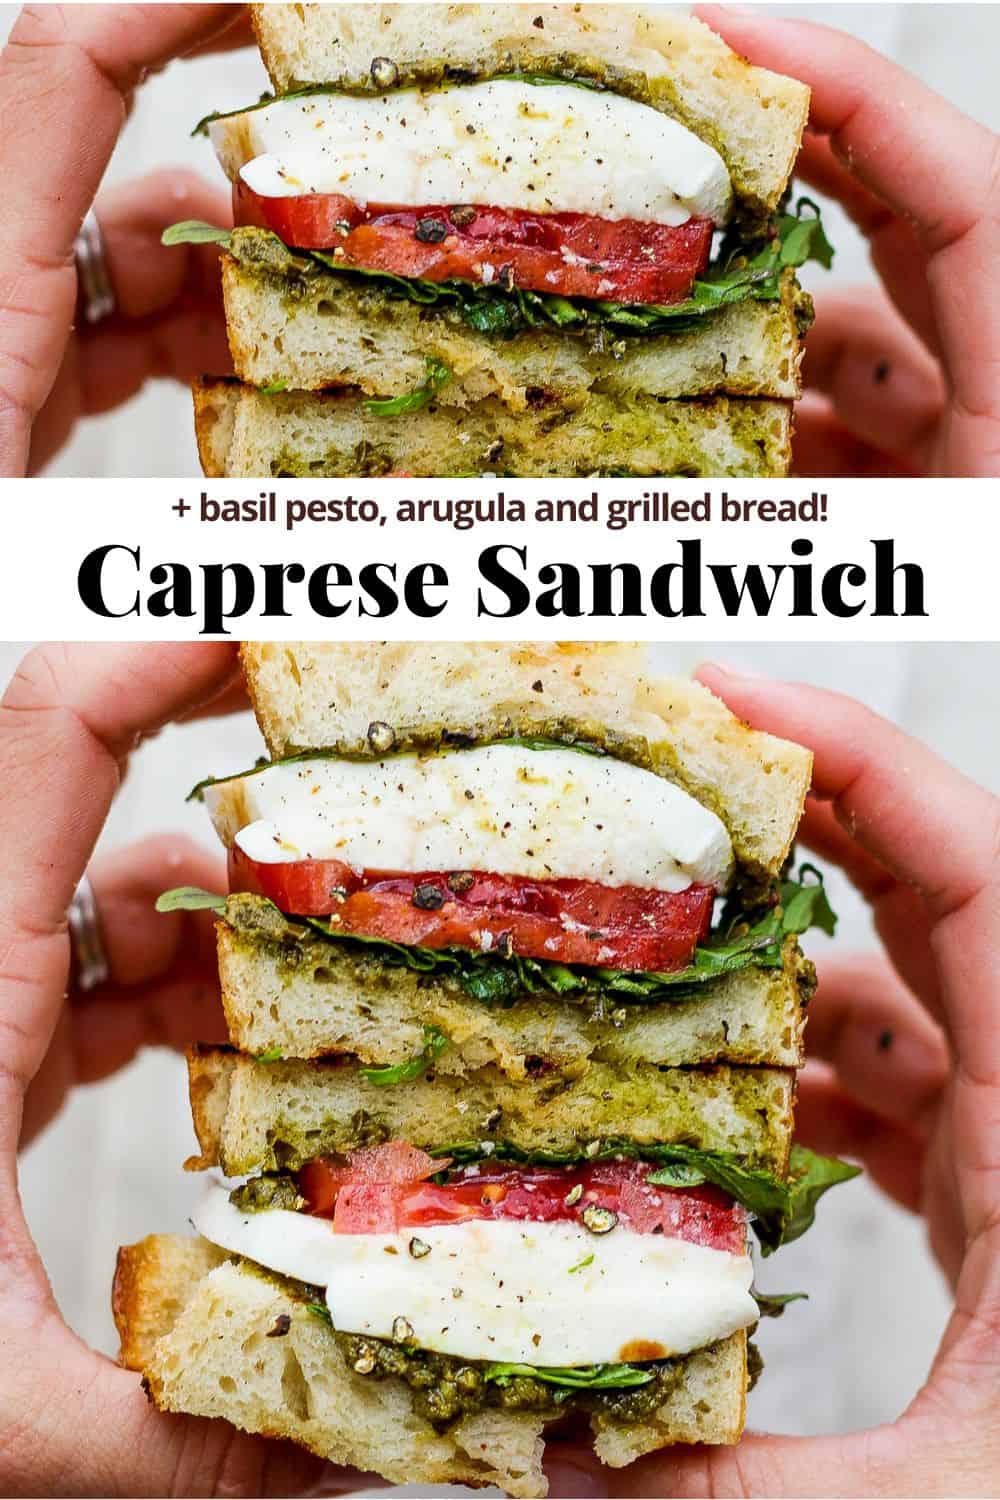 Pinterest image for a caprese sandwich.